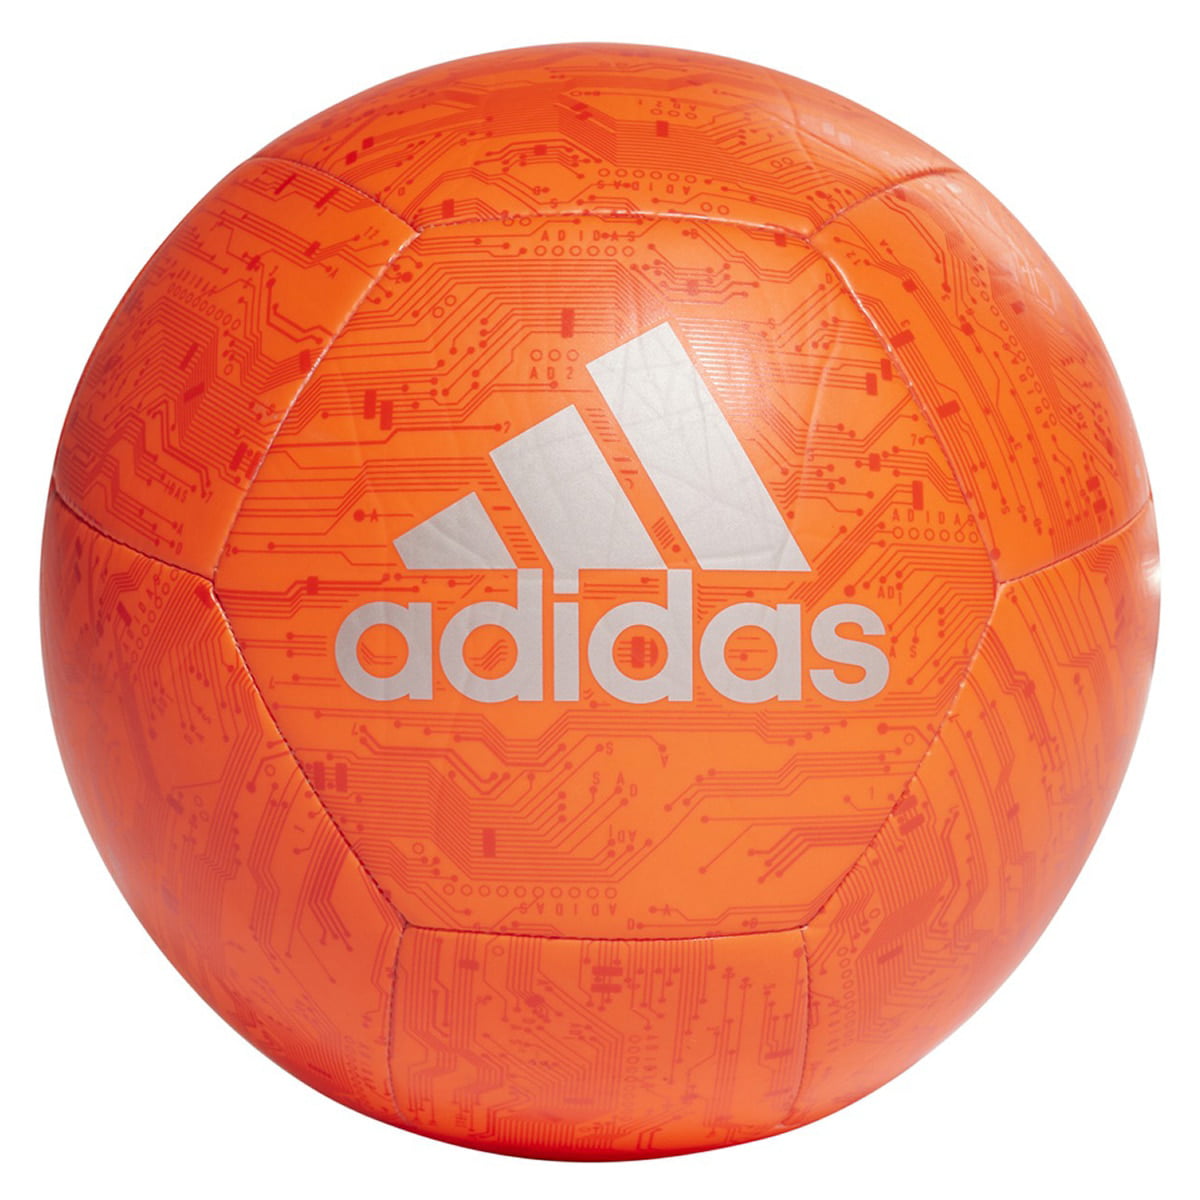 adidas red soccer ball